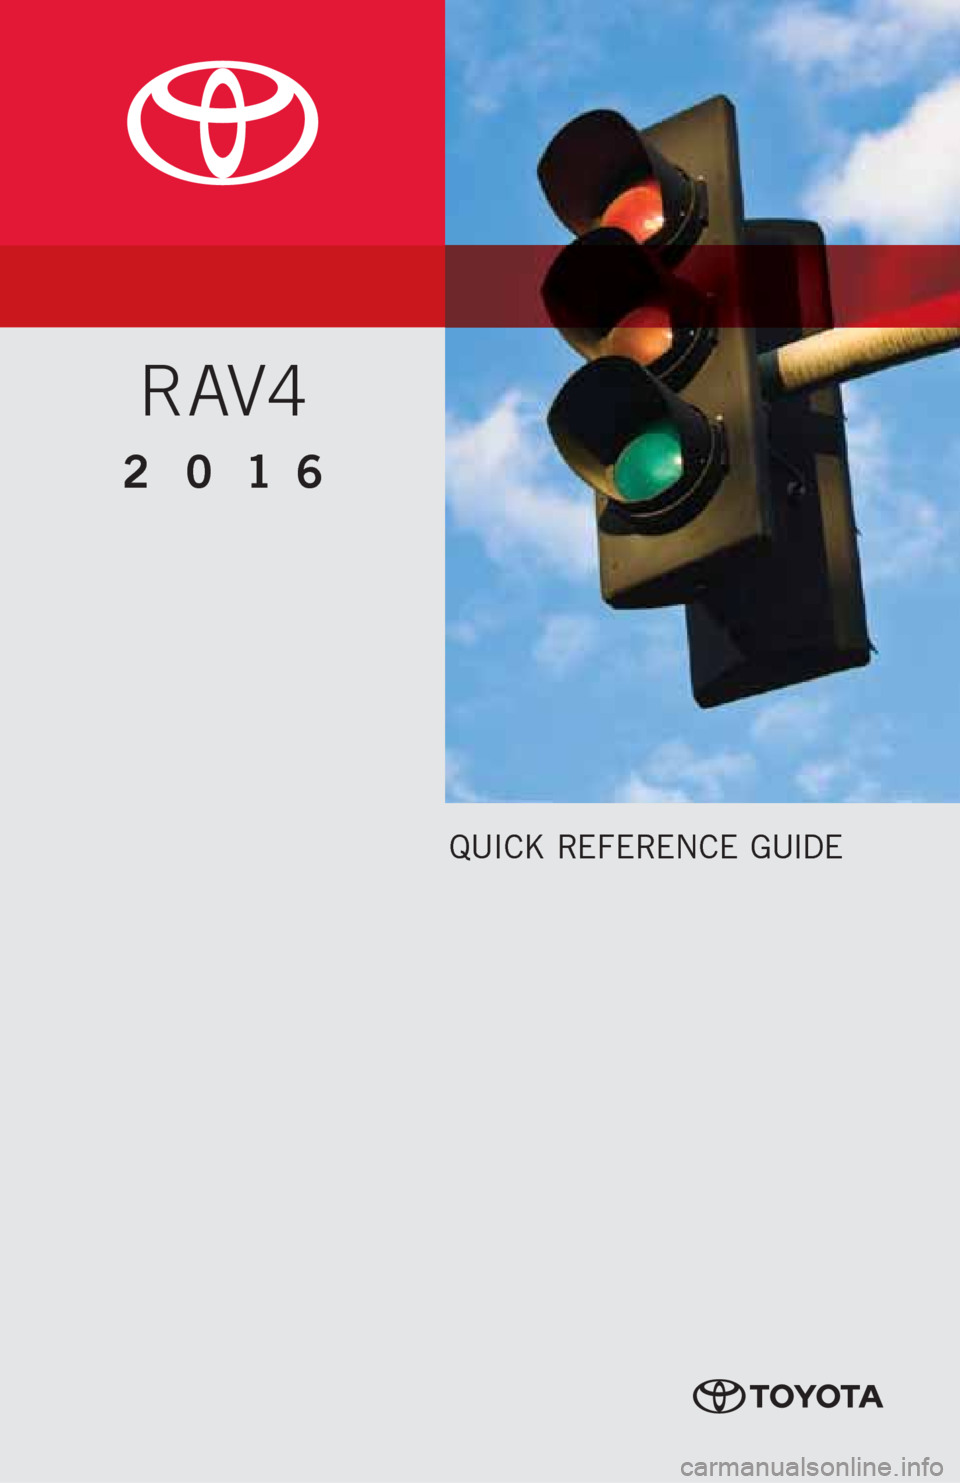 TOYOTA RAV4 2016 XA40 / 4.G Quick Reference Guide QUICK REFERENCE GUIDE
2016
RAV4 